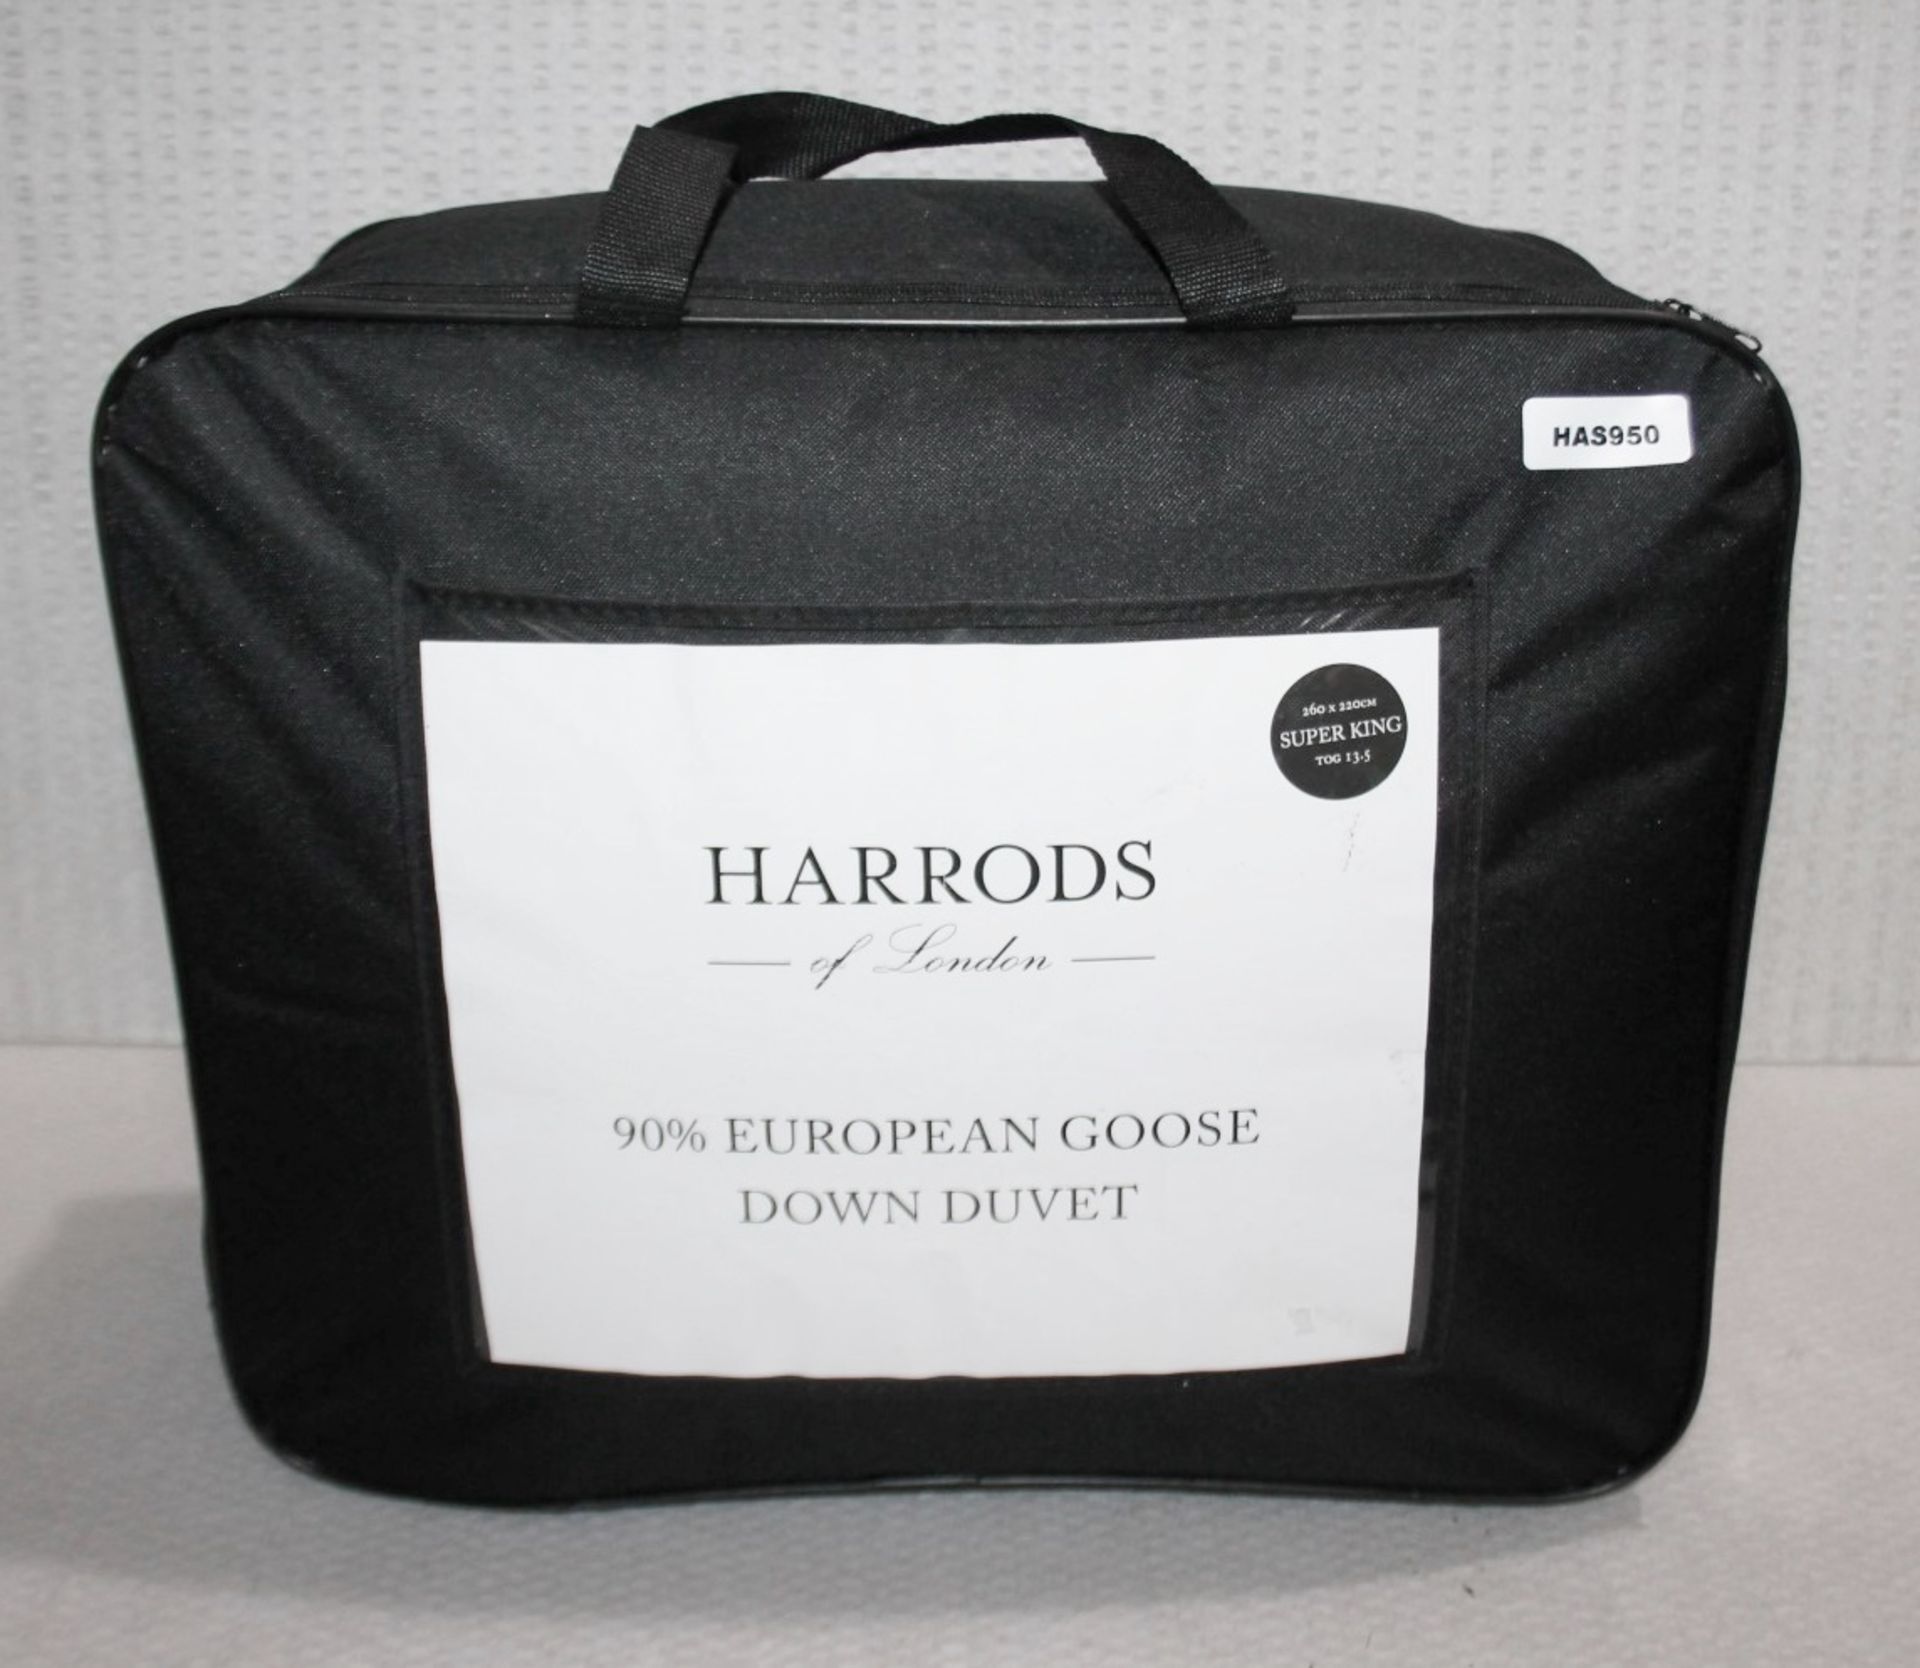 1 x HARRODS OF LONDON Superking 90% European Goose Down Duvet (13.5 Tog) - Original Price £1025.00 - Image 2 of 6